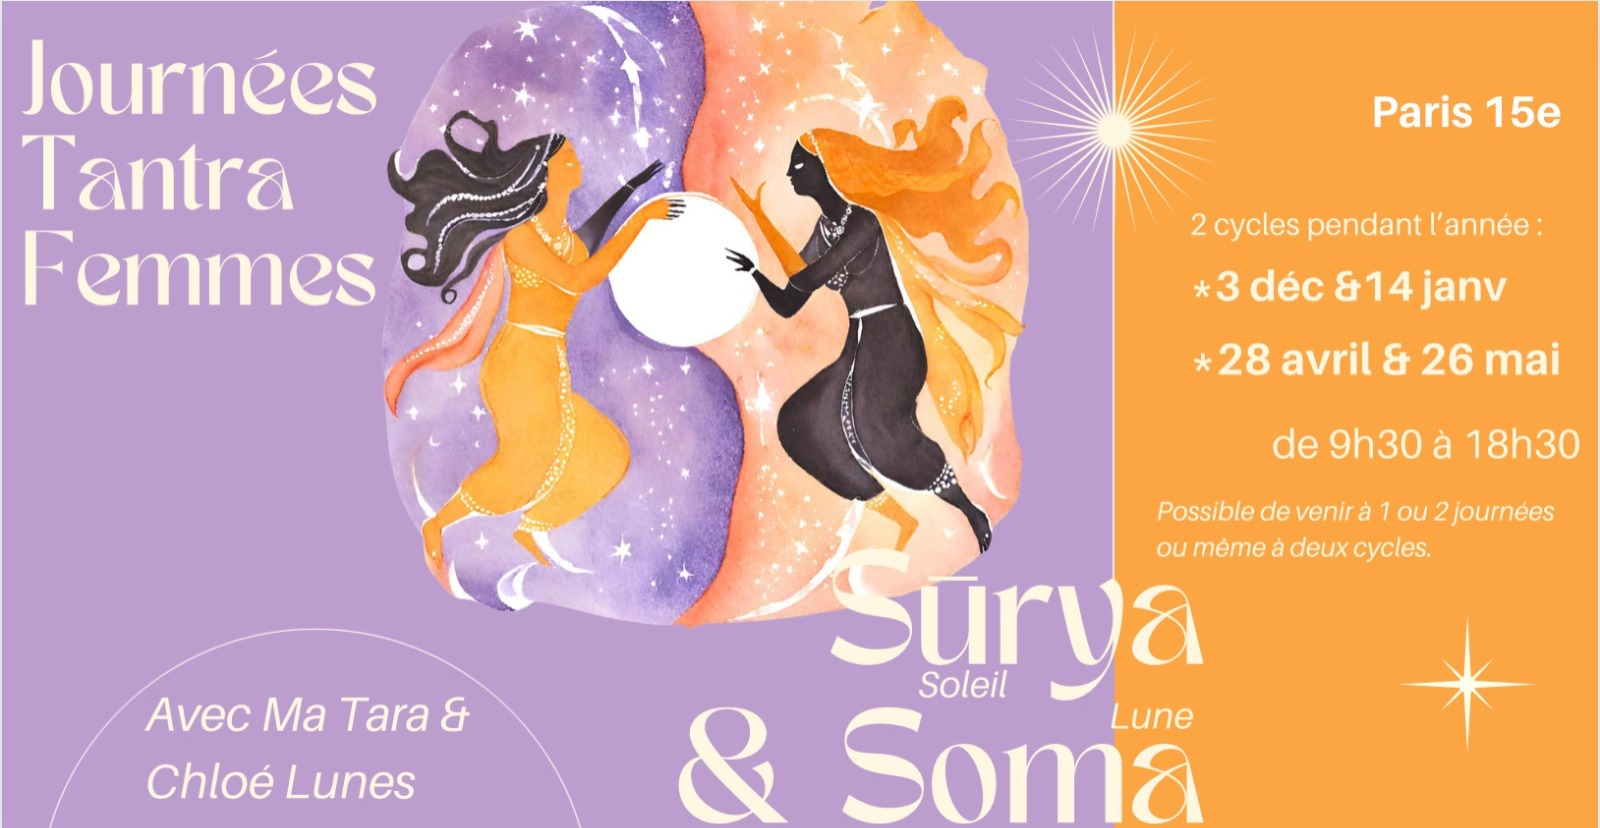 Surya & Soma